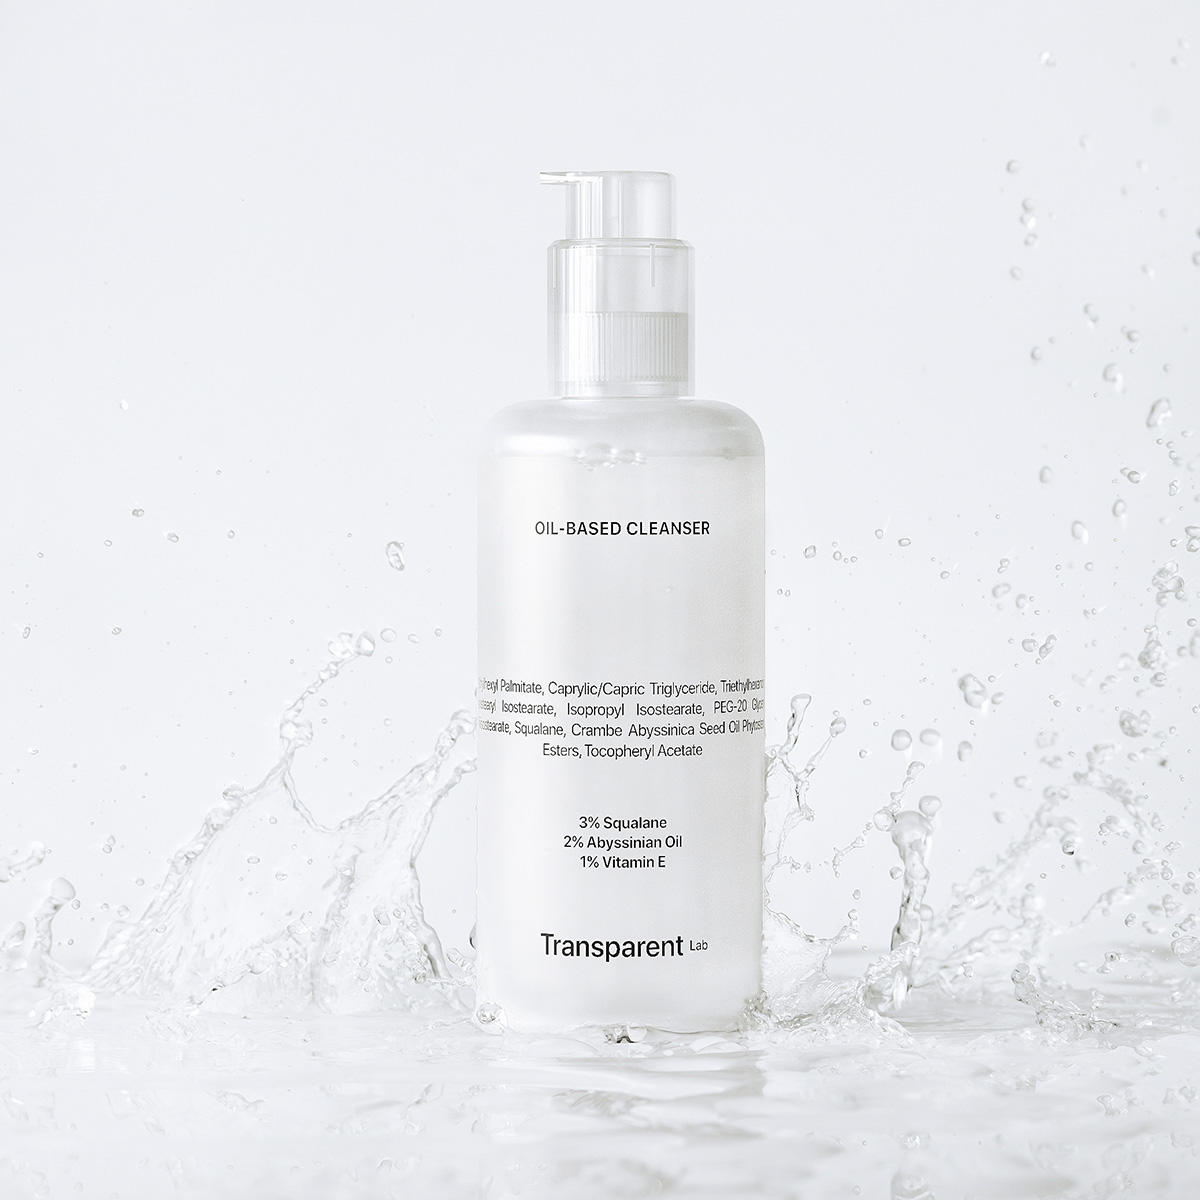 Transparent Lab Oil-Based Cleanser 200 ml - 3